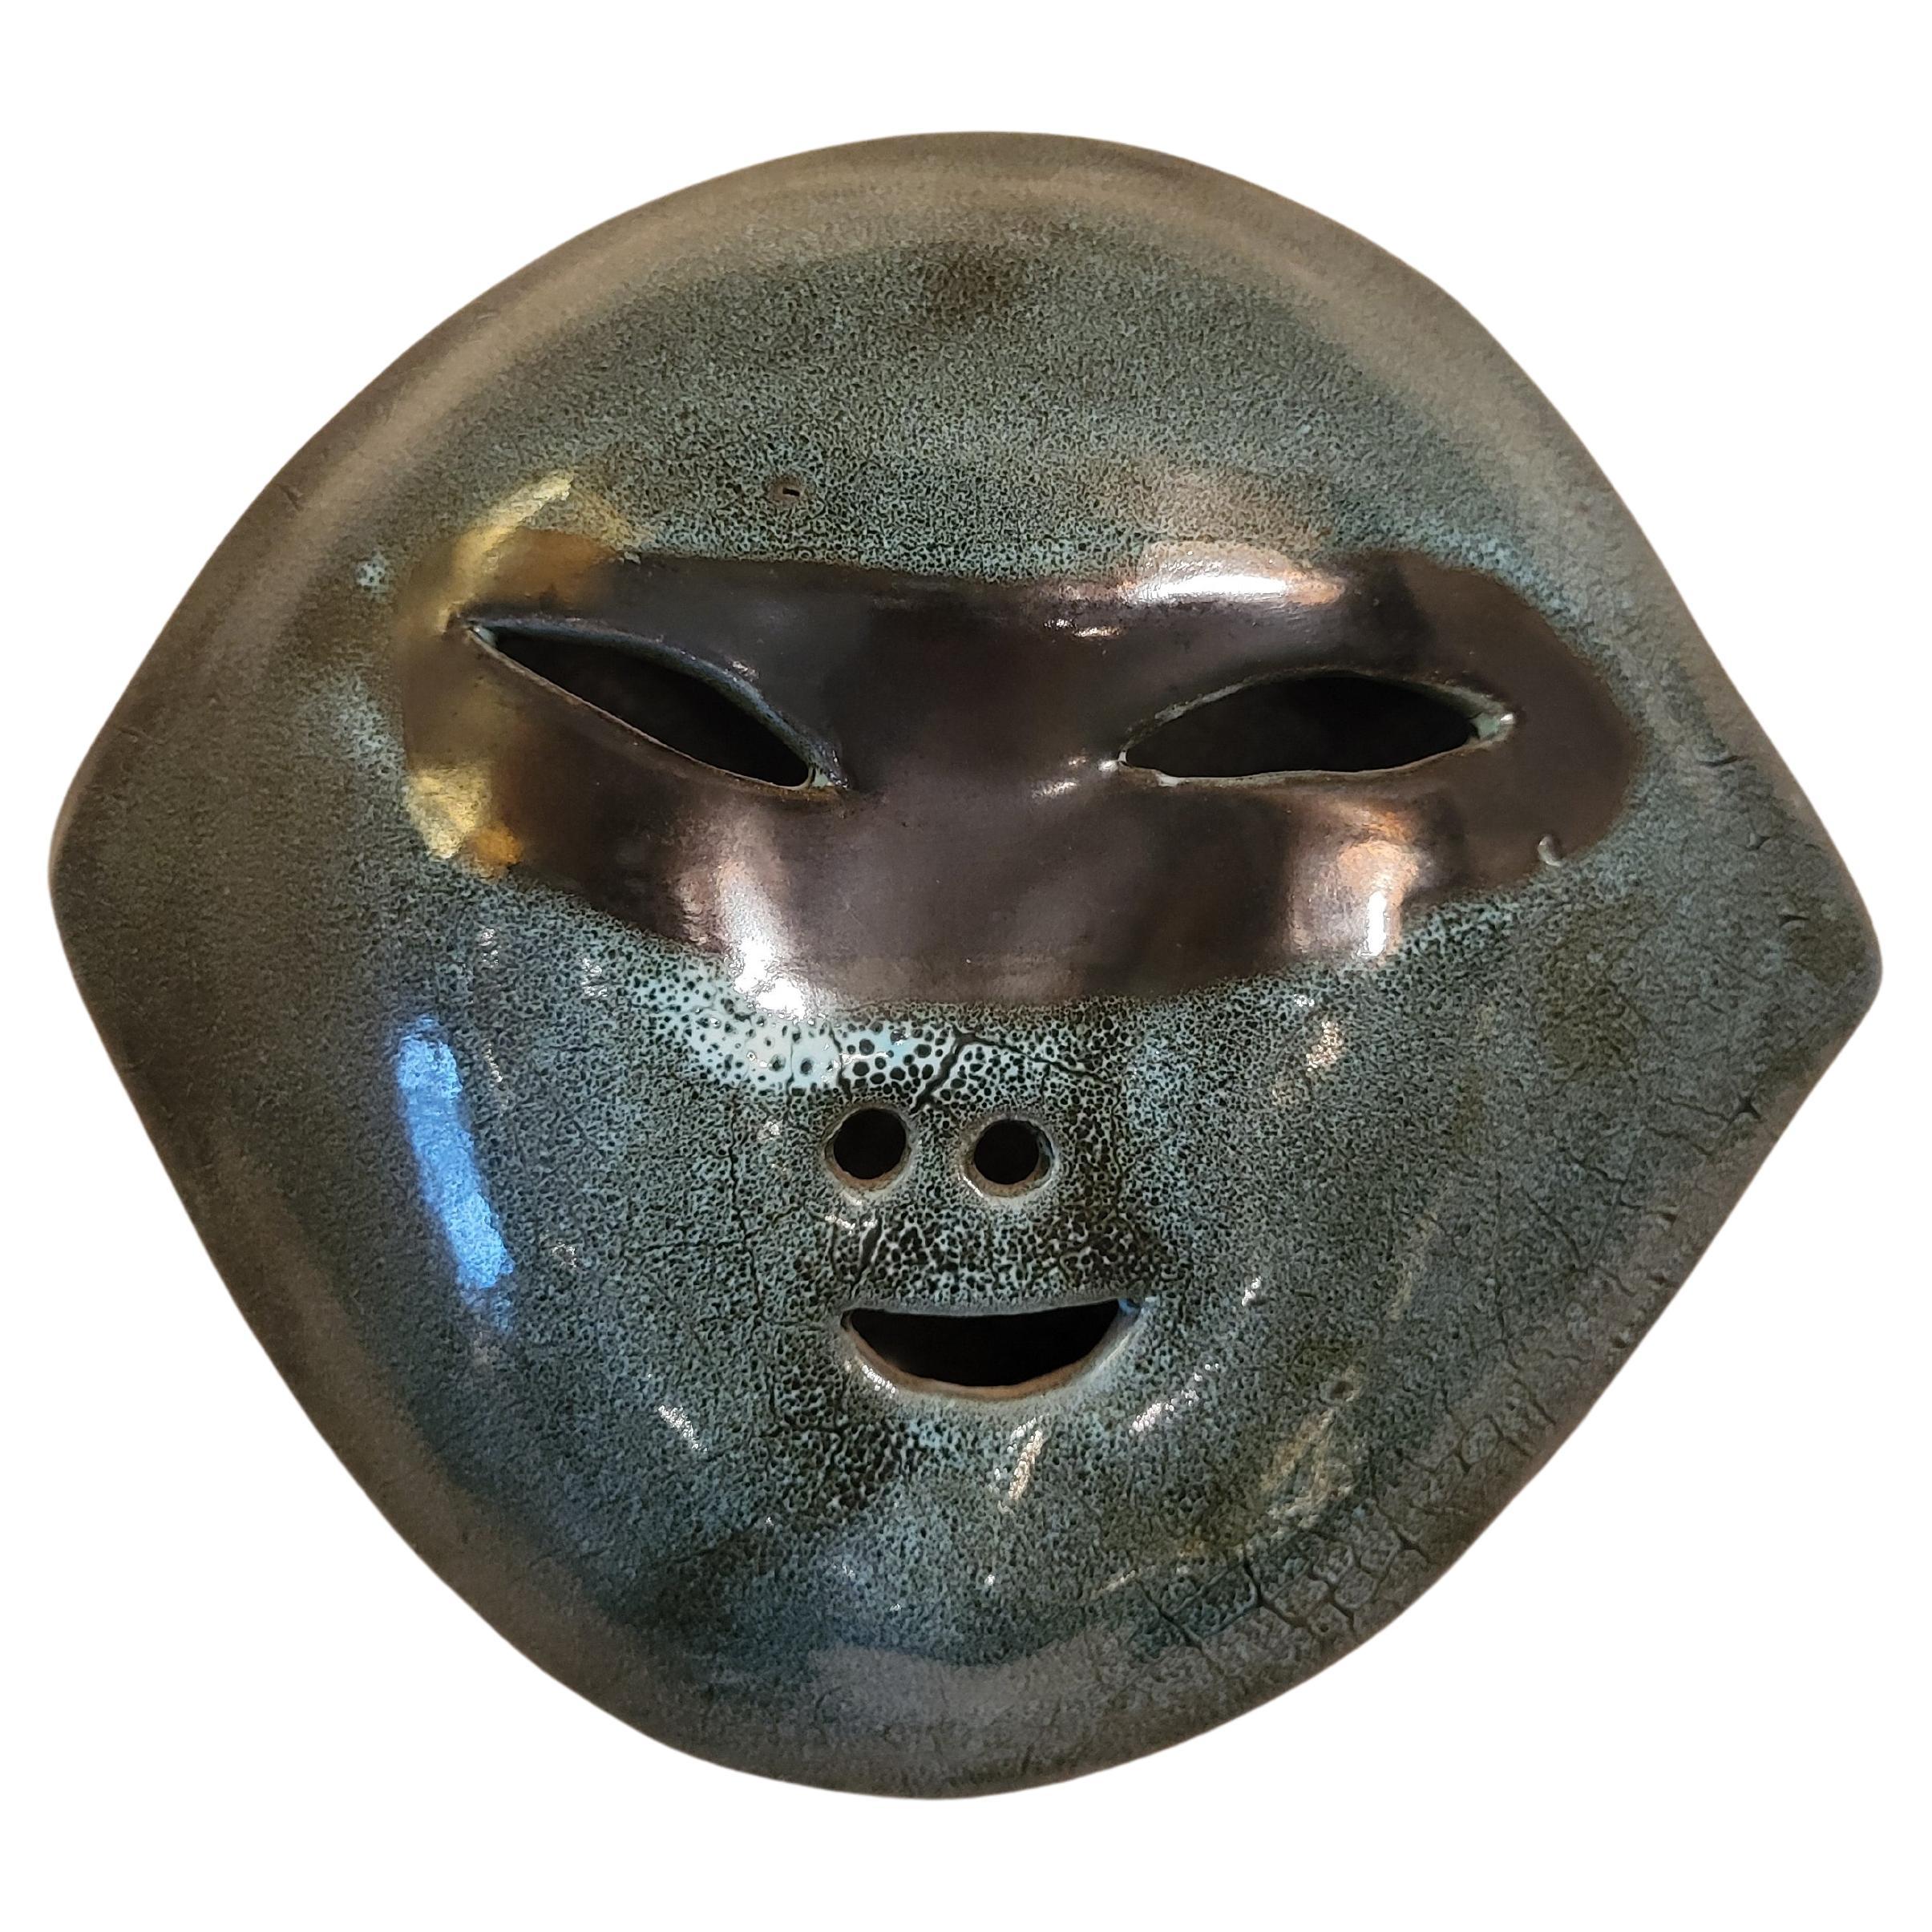 Masque en céramique d'Accolay, France, actif entre 1947 et 1983